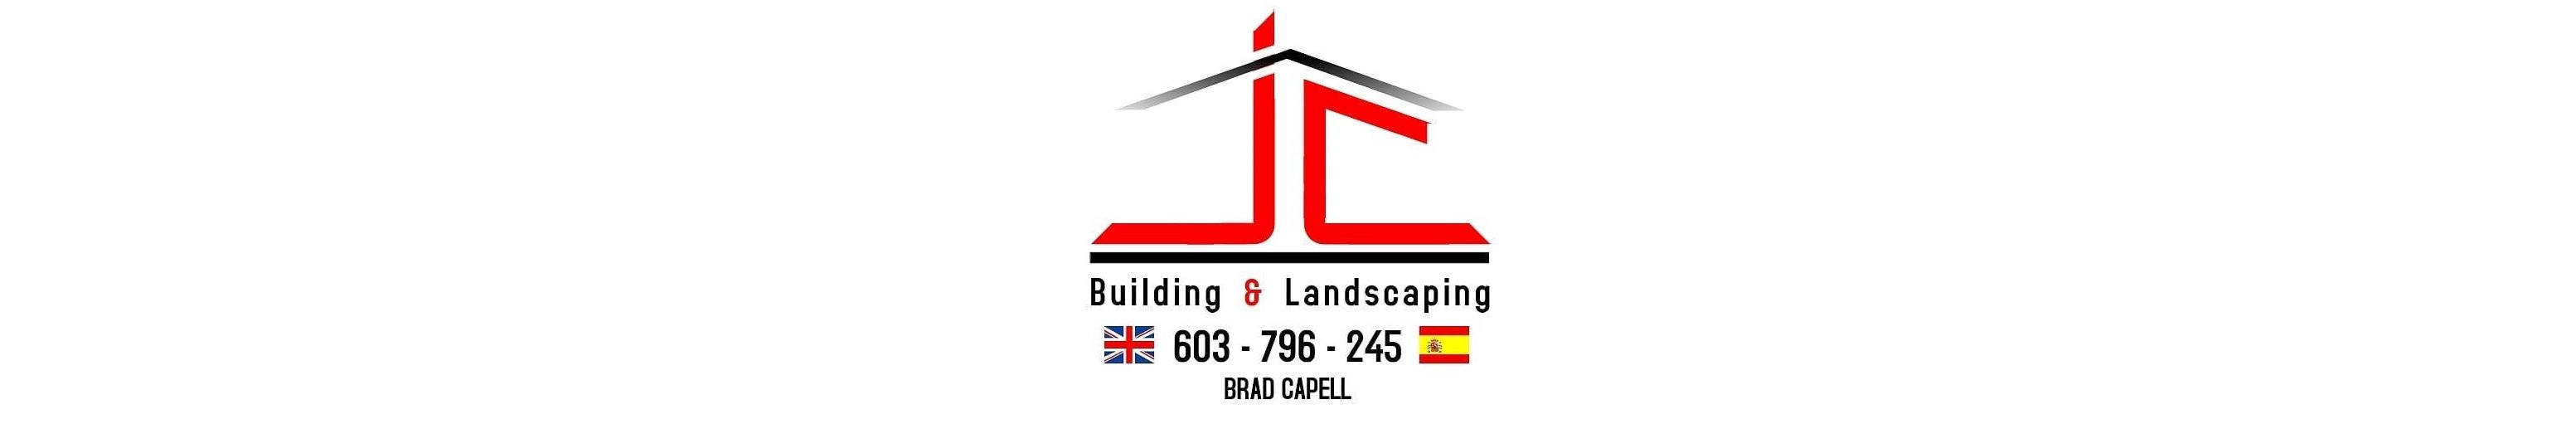 Building, Landscaping, Reforms & Repairs